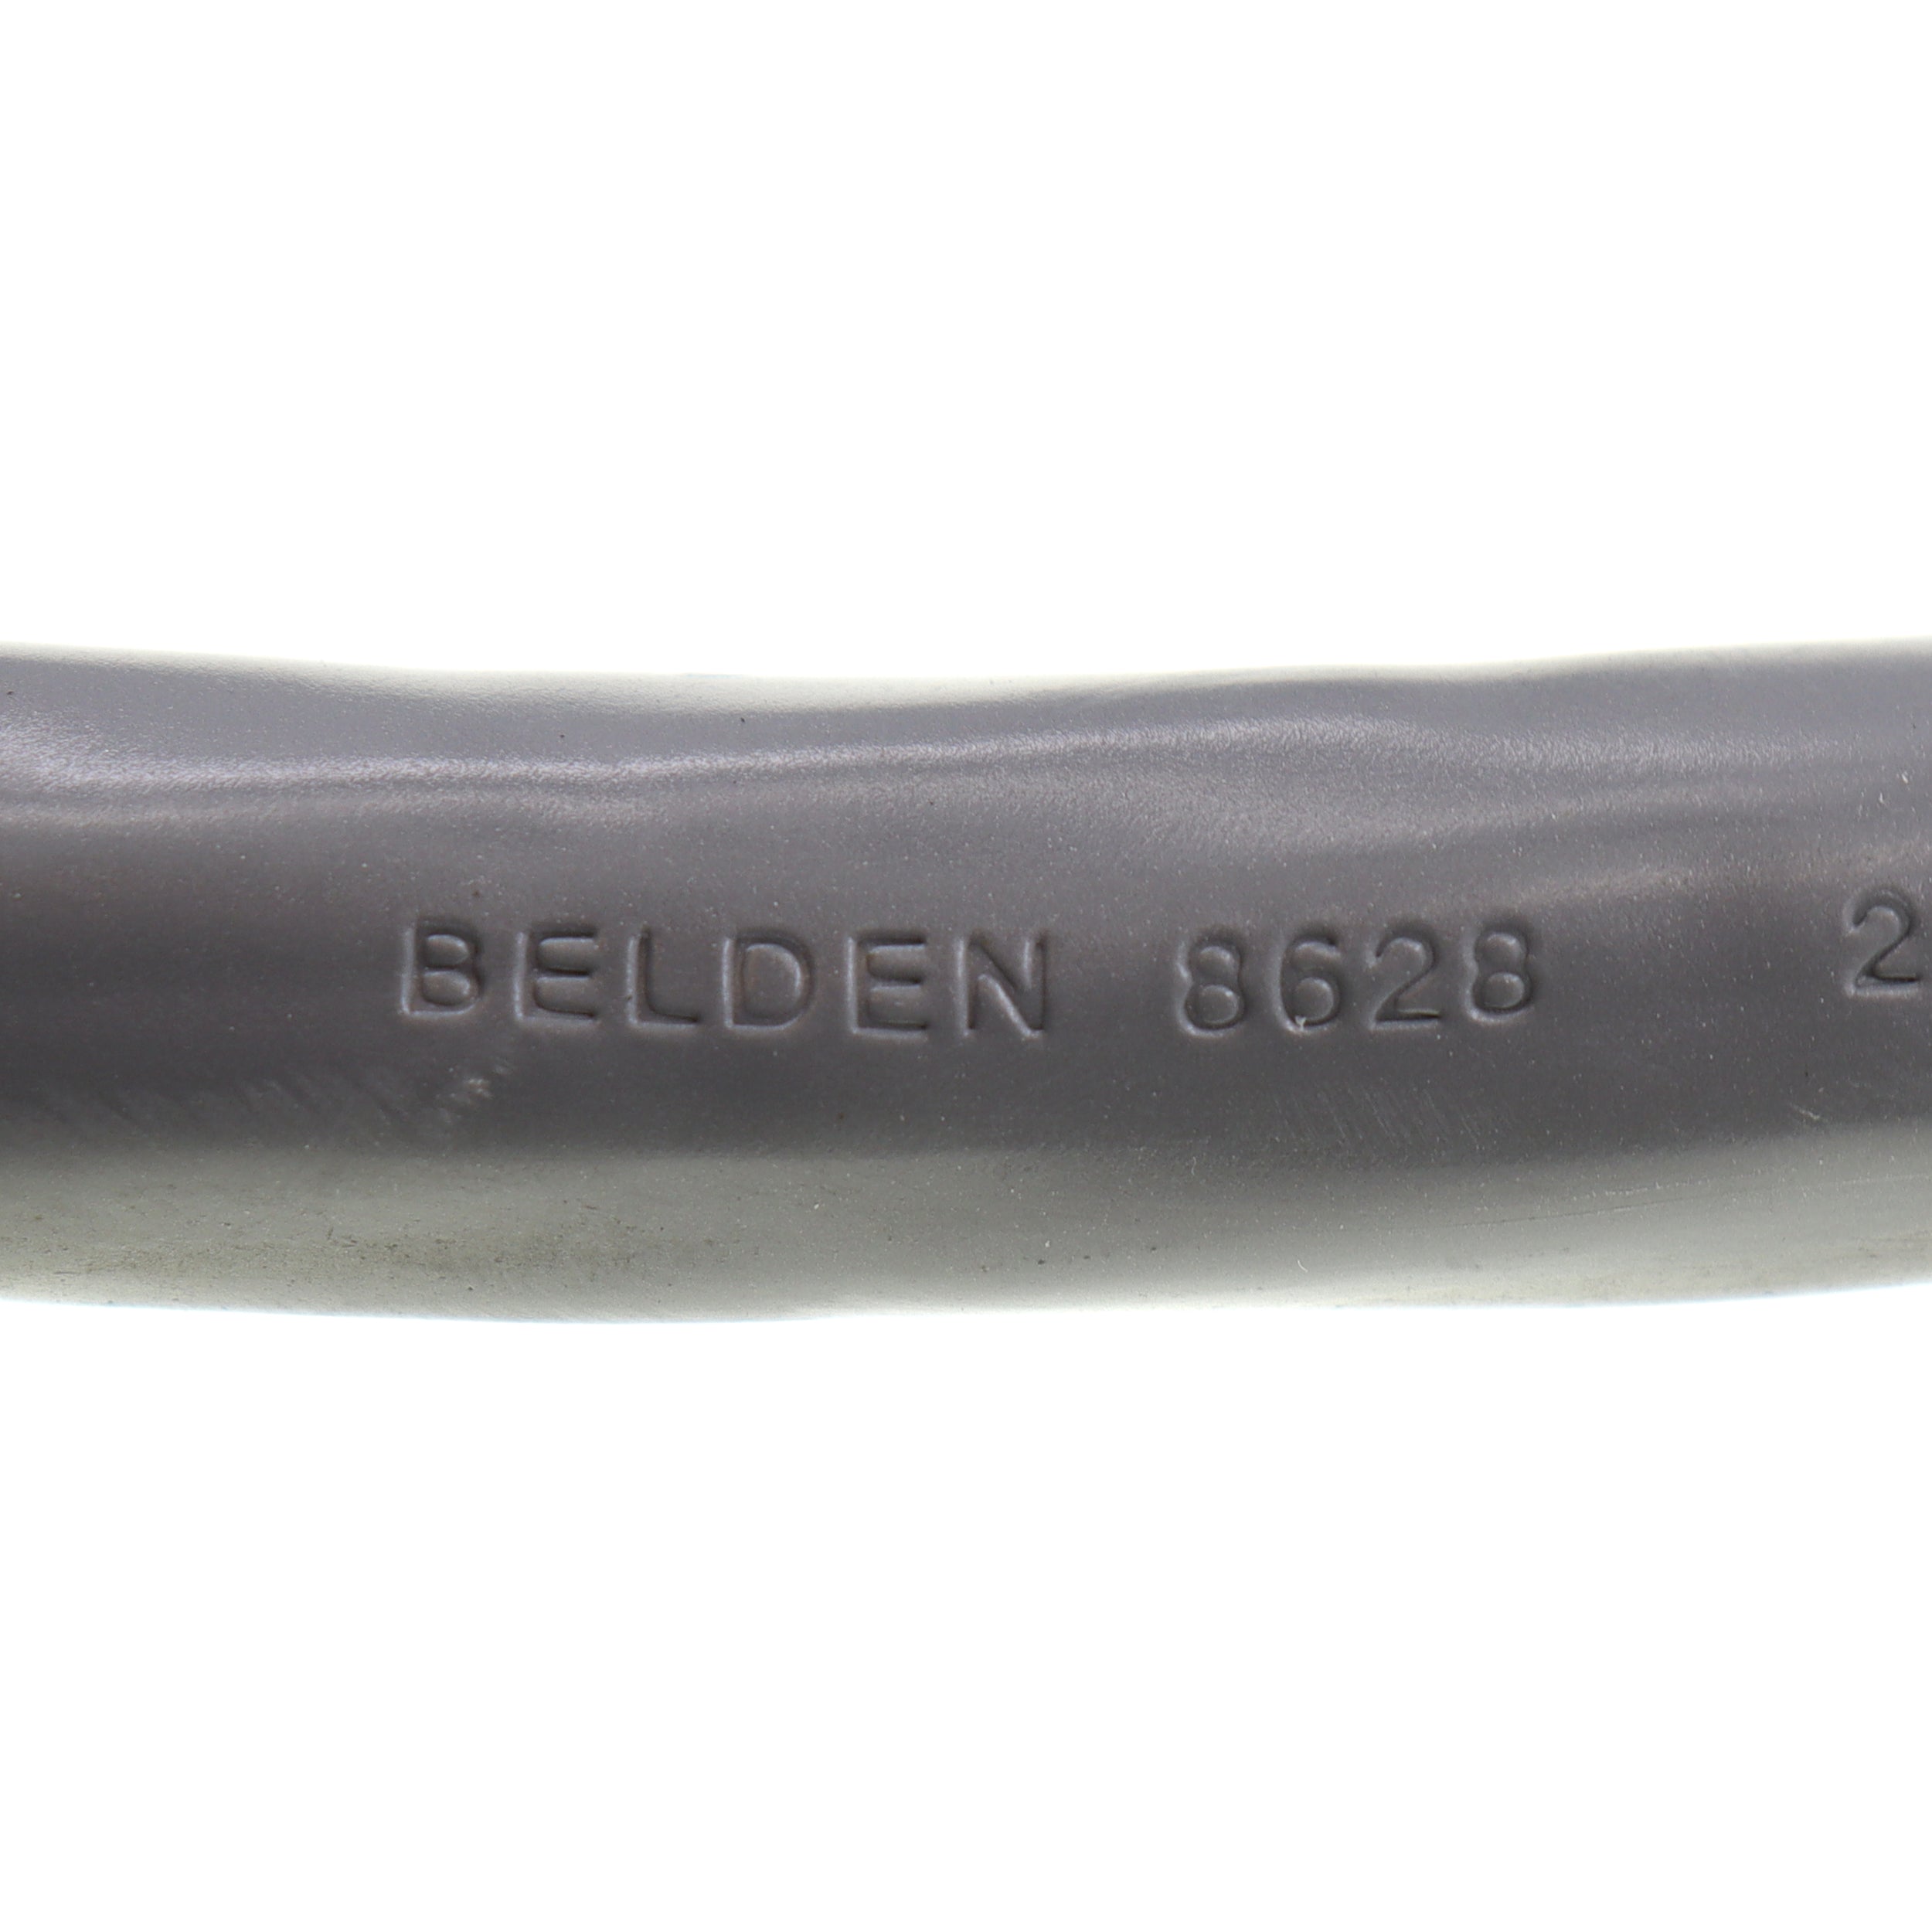 Belden, BELDEN 8628 MULTI-CONDUCTOR STR-TC CONTROL CABLE, 14AWG 7C, PVC, GRAY, PER-FOOT